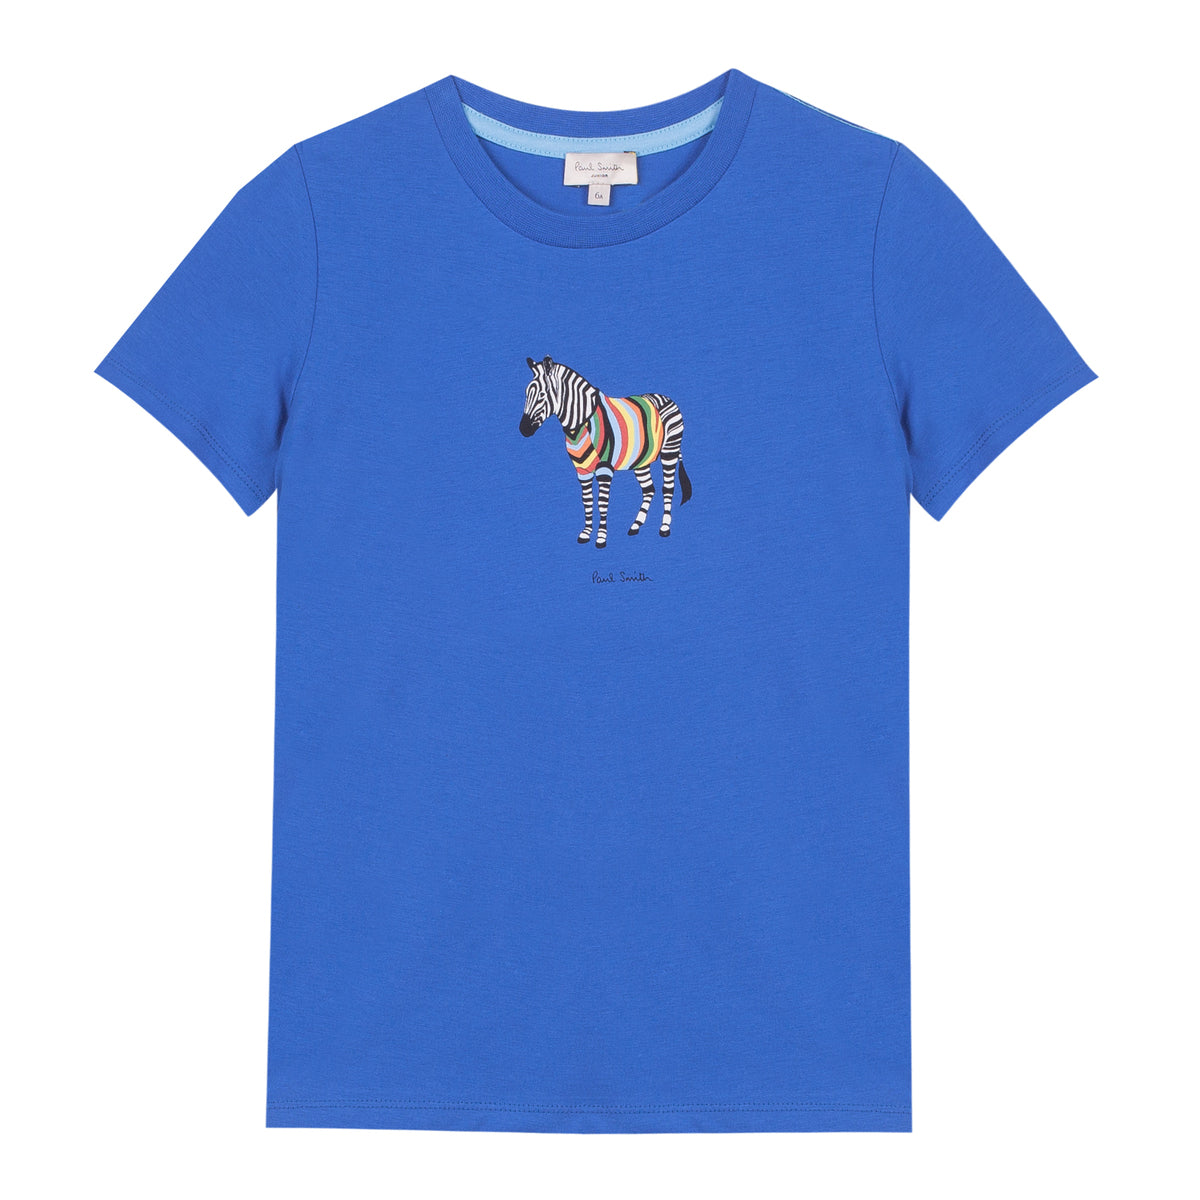 Paul Smith Junior Kids Romano Tee Shirt in Royal Blue 5L10772 450